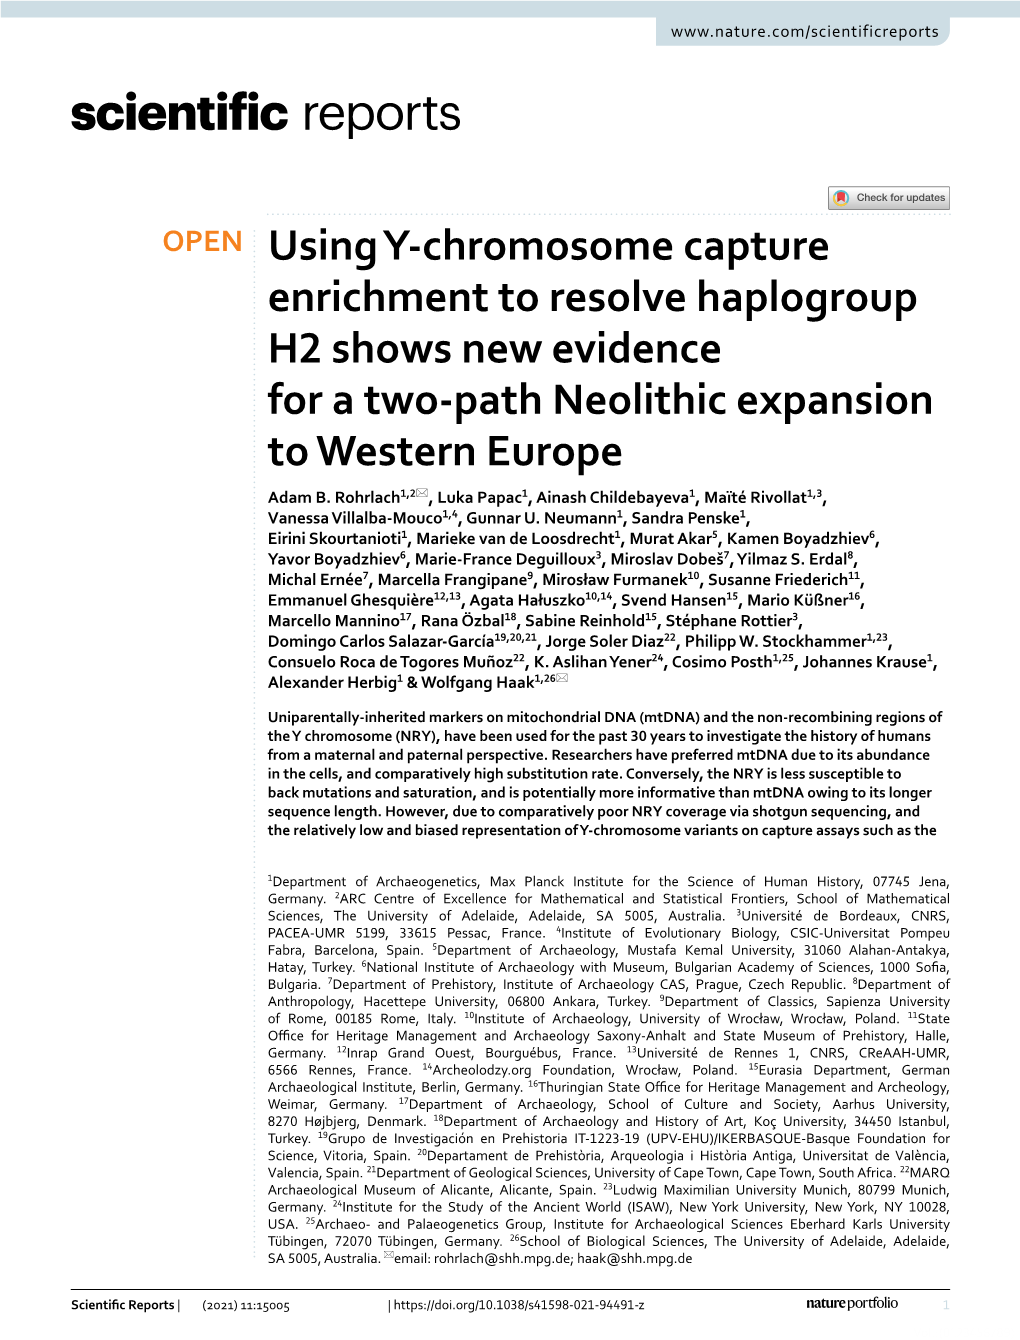 Using Y-Chromosome Capture Enrichment to Resolve Haplogroup